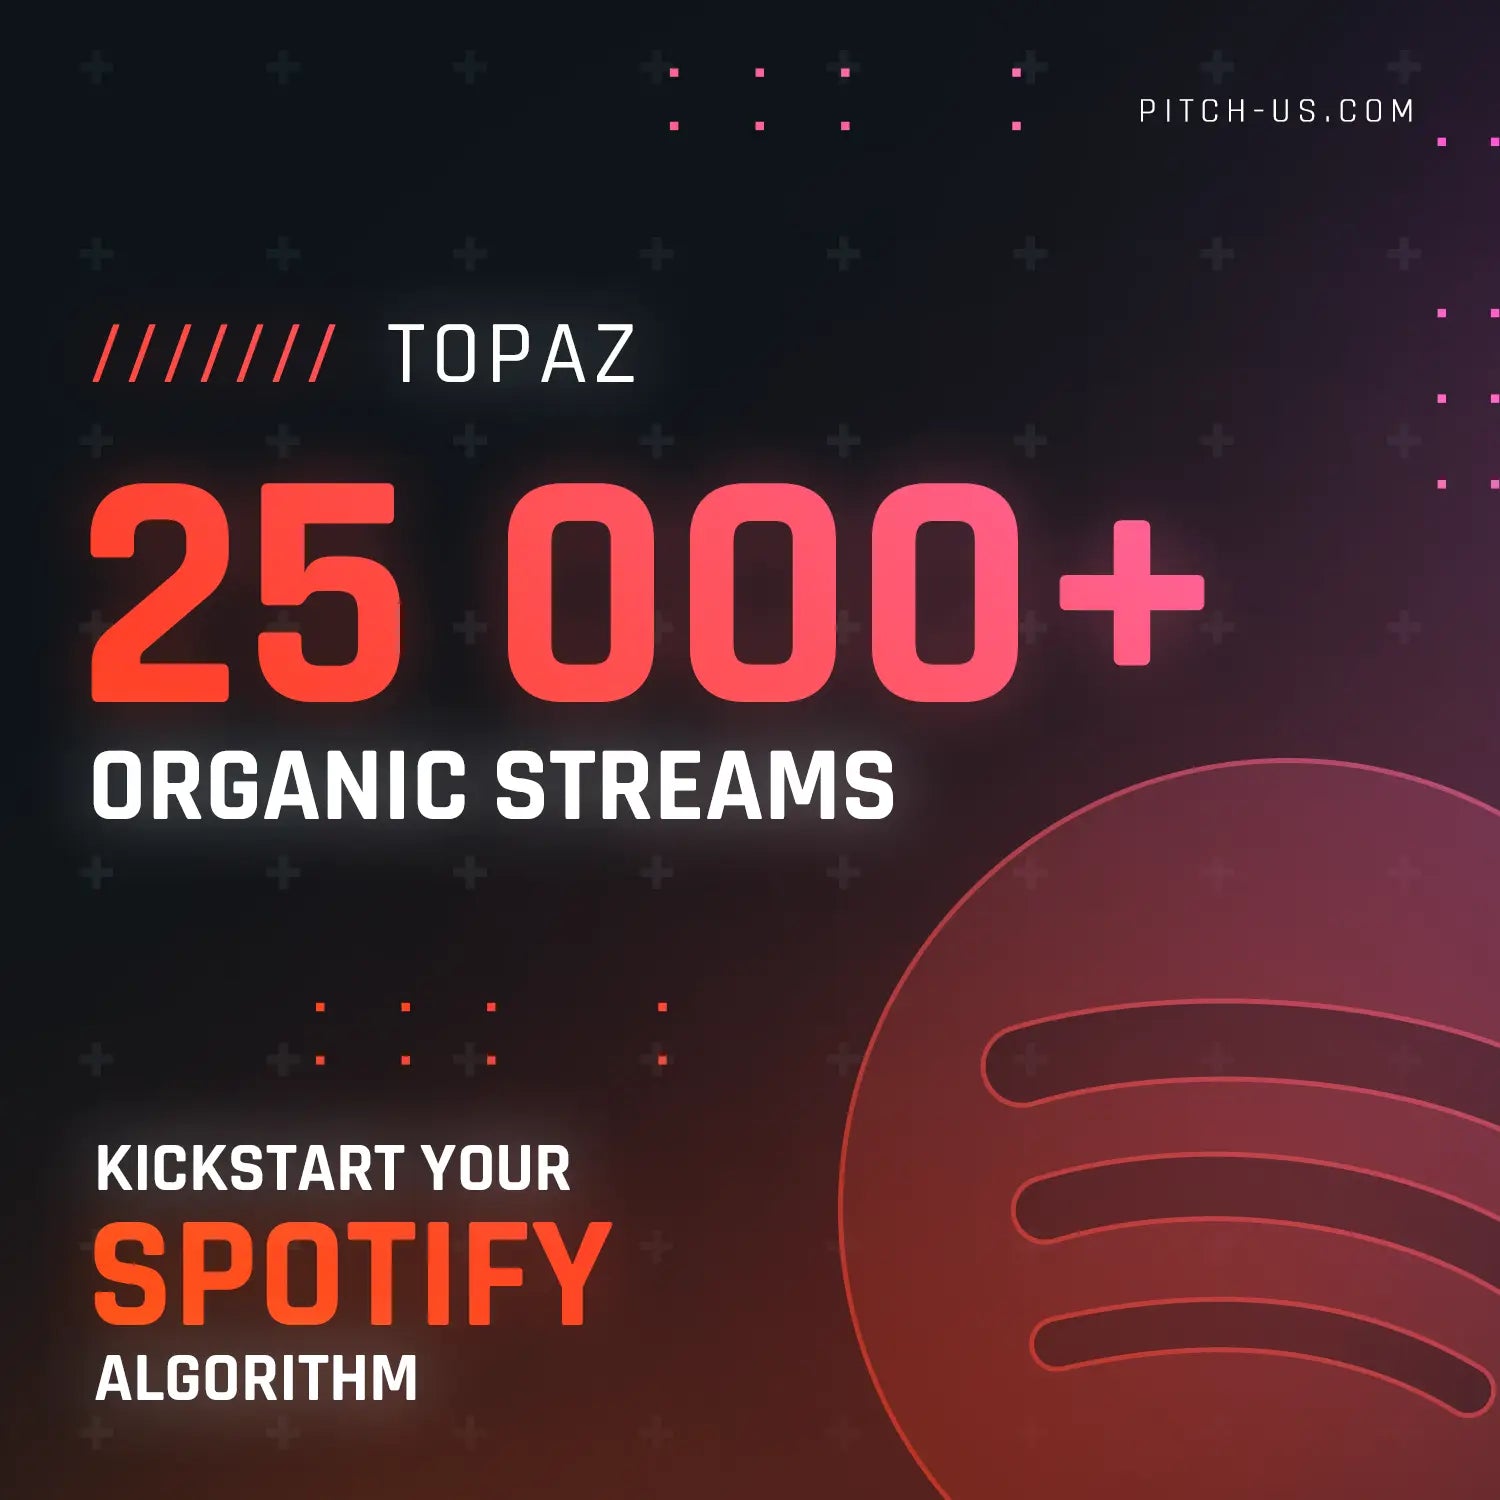 Topaz (25,000+ Organic Streams) Pitch Us